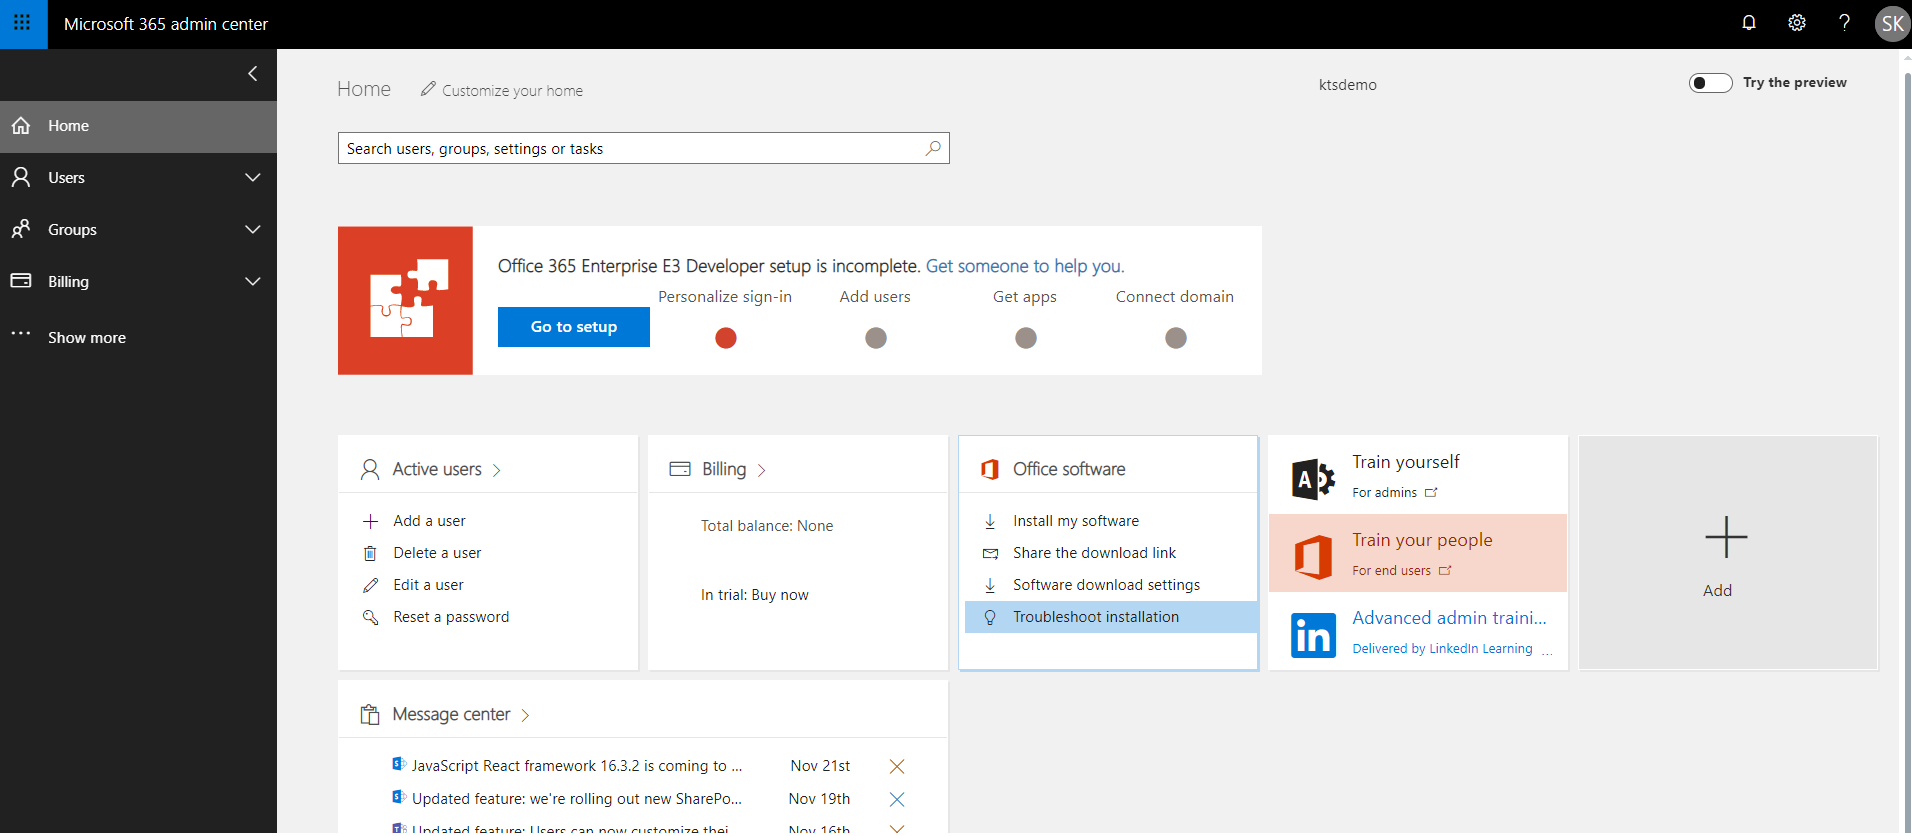 Manage Dashboard in Microsoft 365 Admin Center